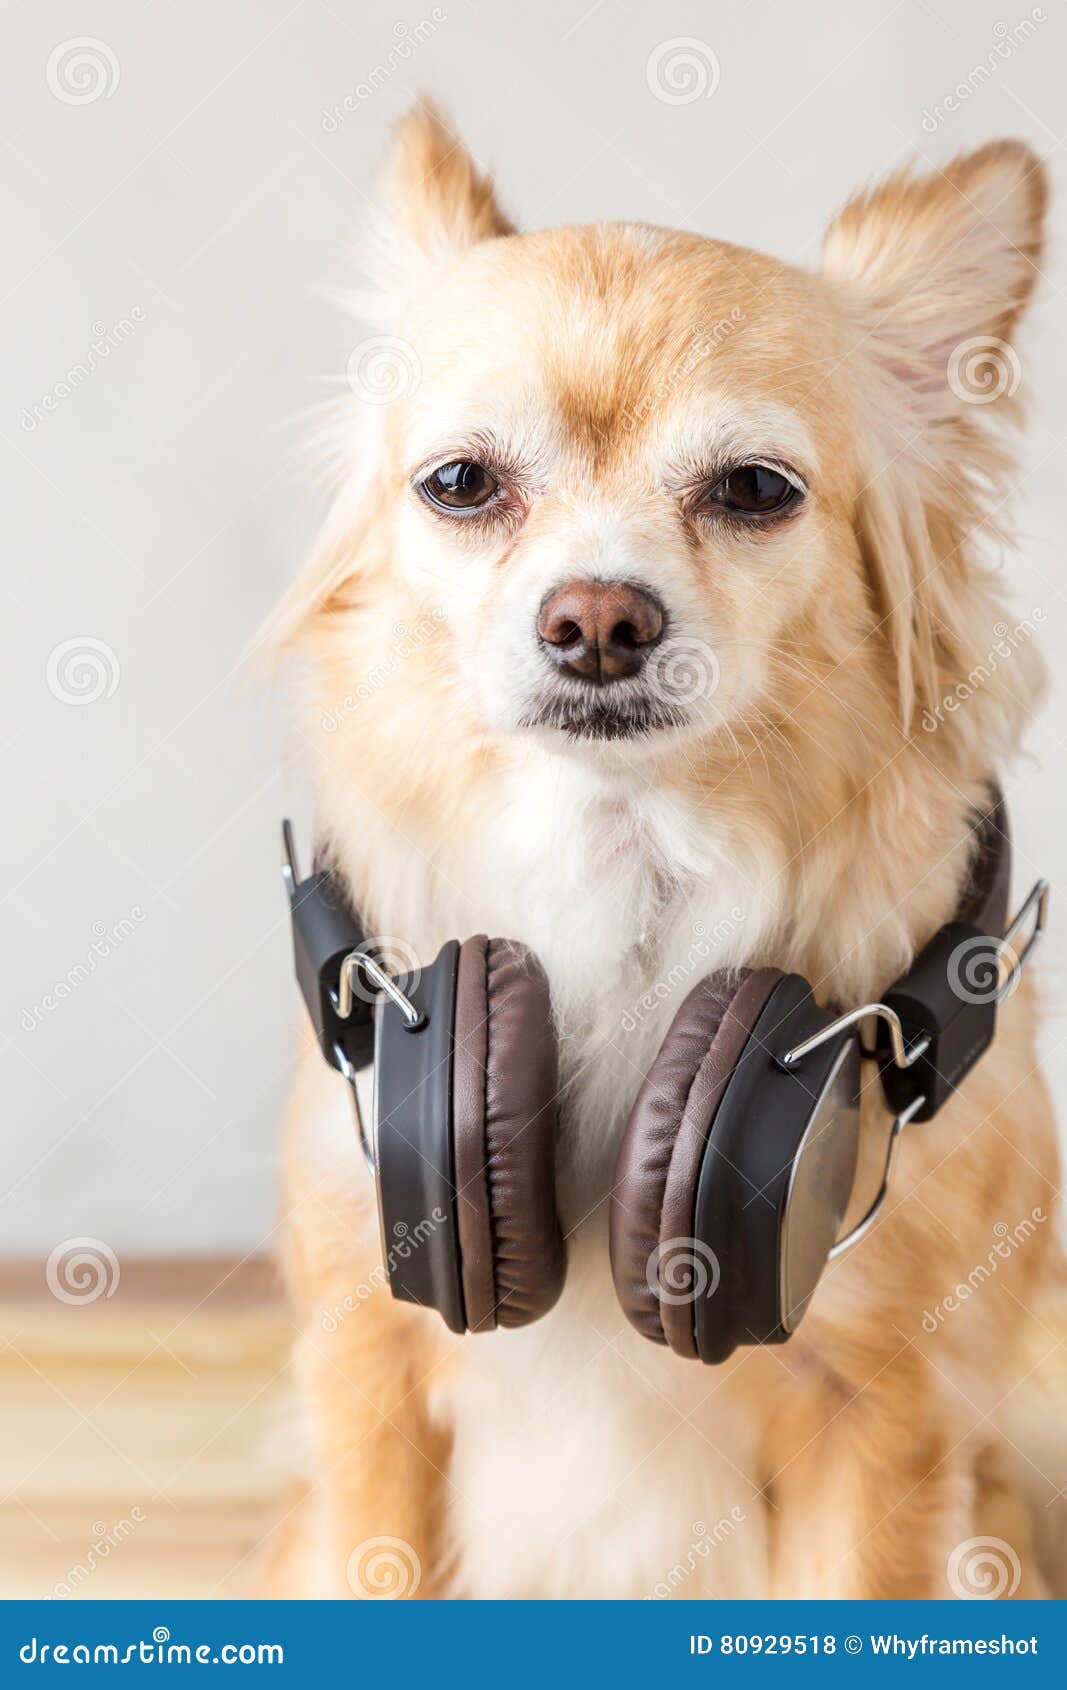 chihuahua listening to music meme